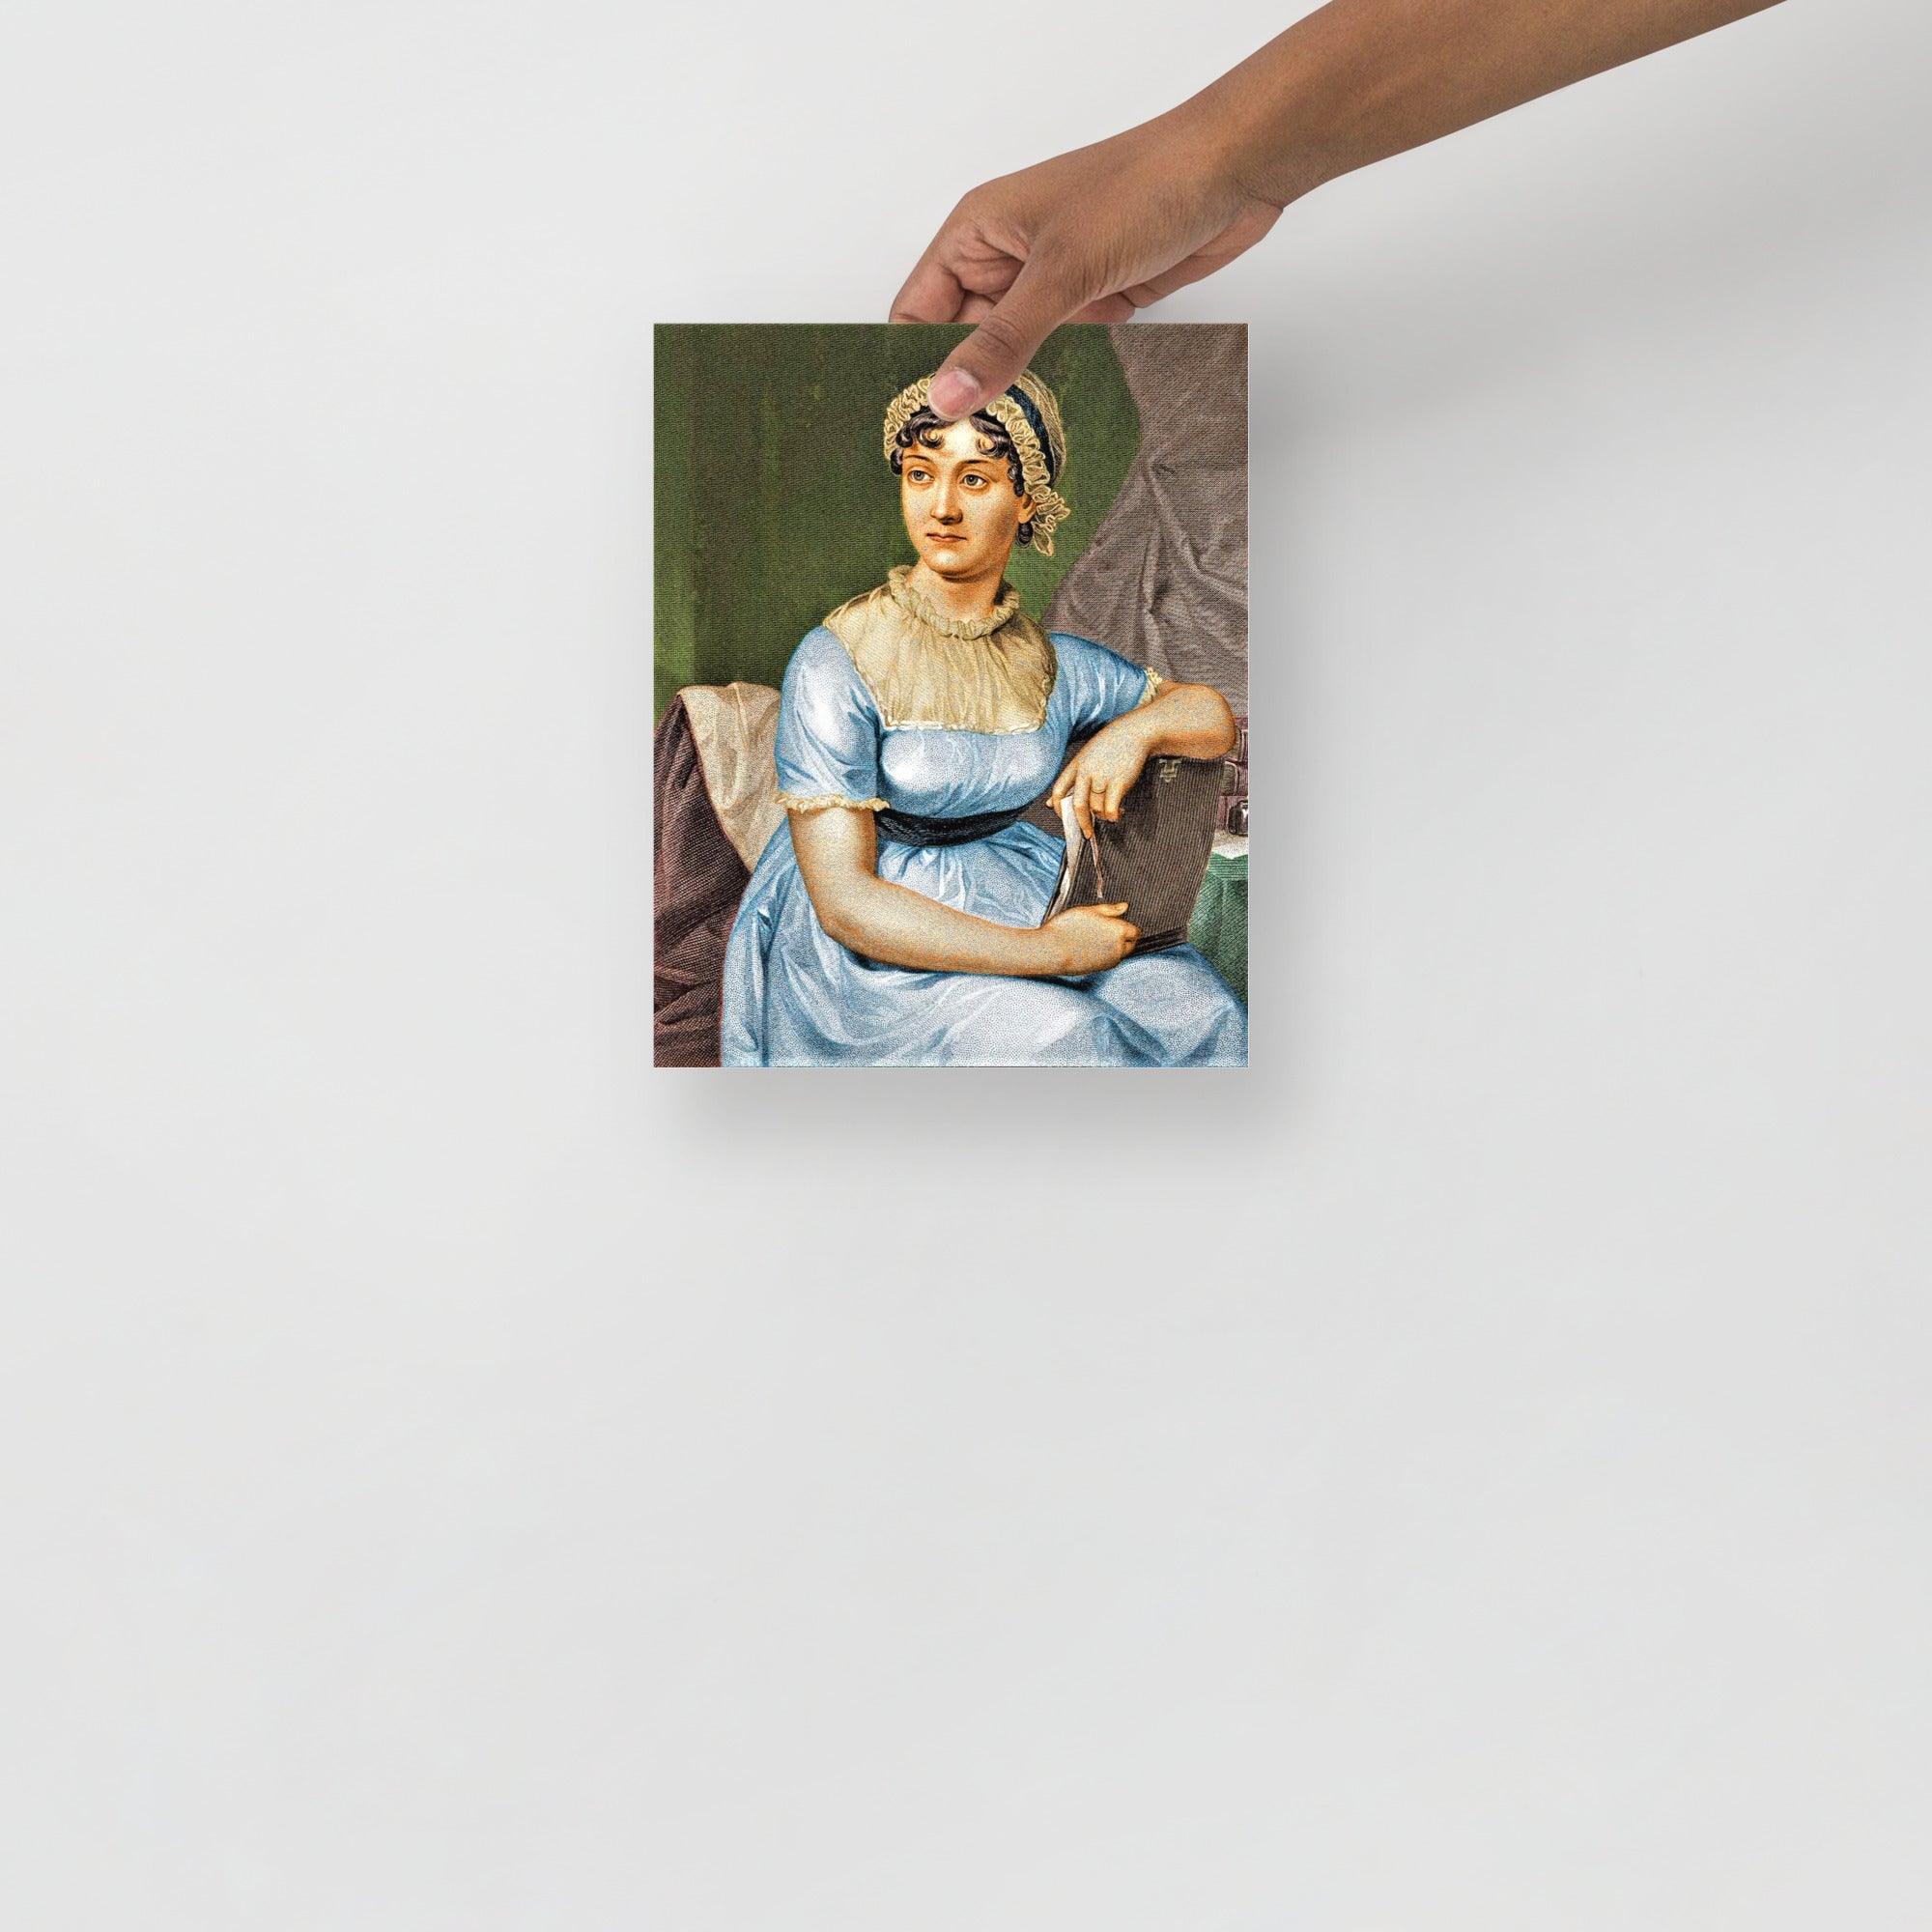 A Jane Austen poster on a plain backdrop in size 8x10”.